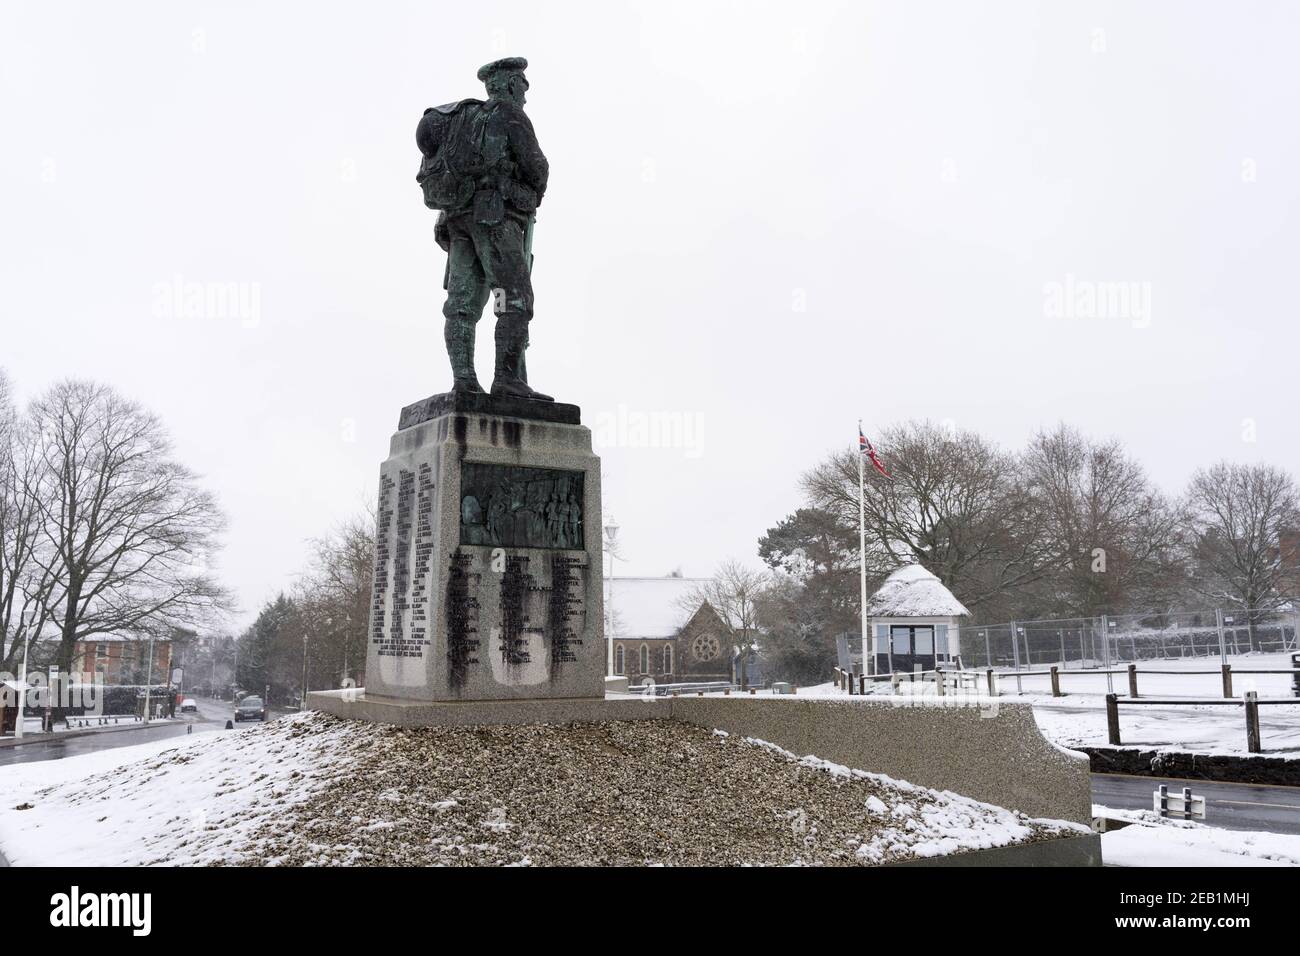 Snow blanked the war memorial on The Vine in Sevenoaks, Kent, England Stock Photo